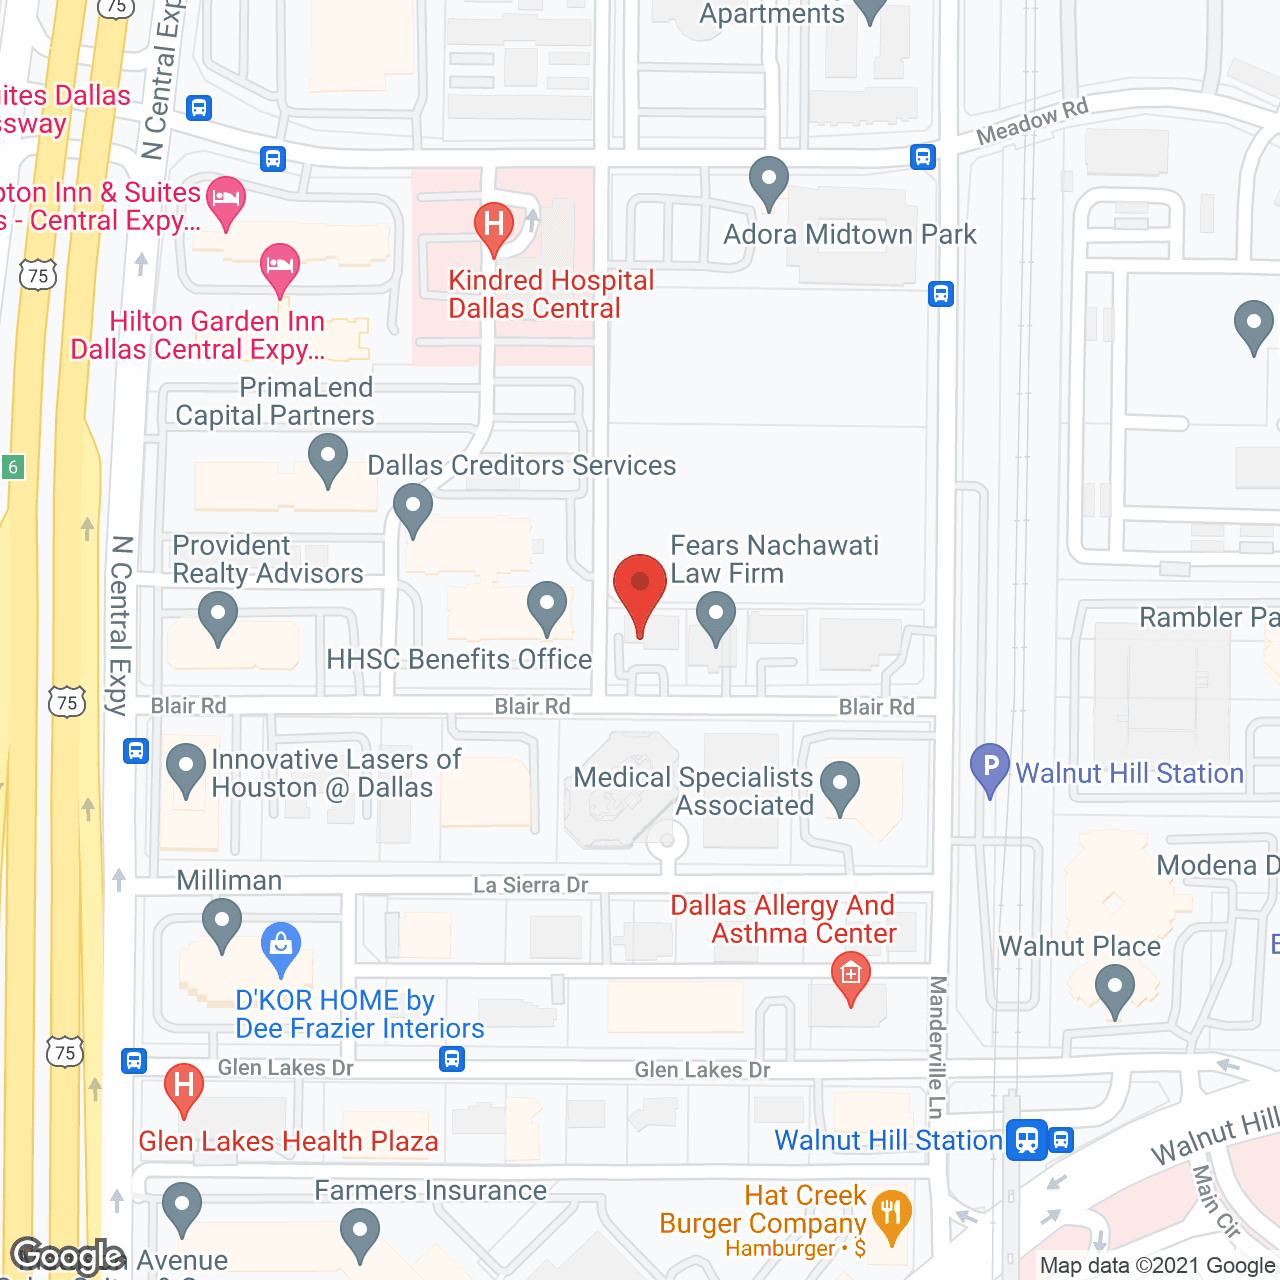 Five Star Premier Residences of Dallas in google map